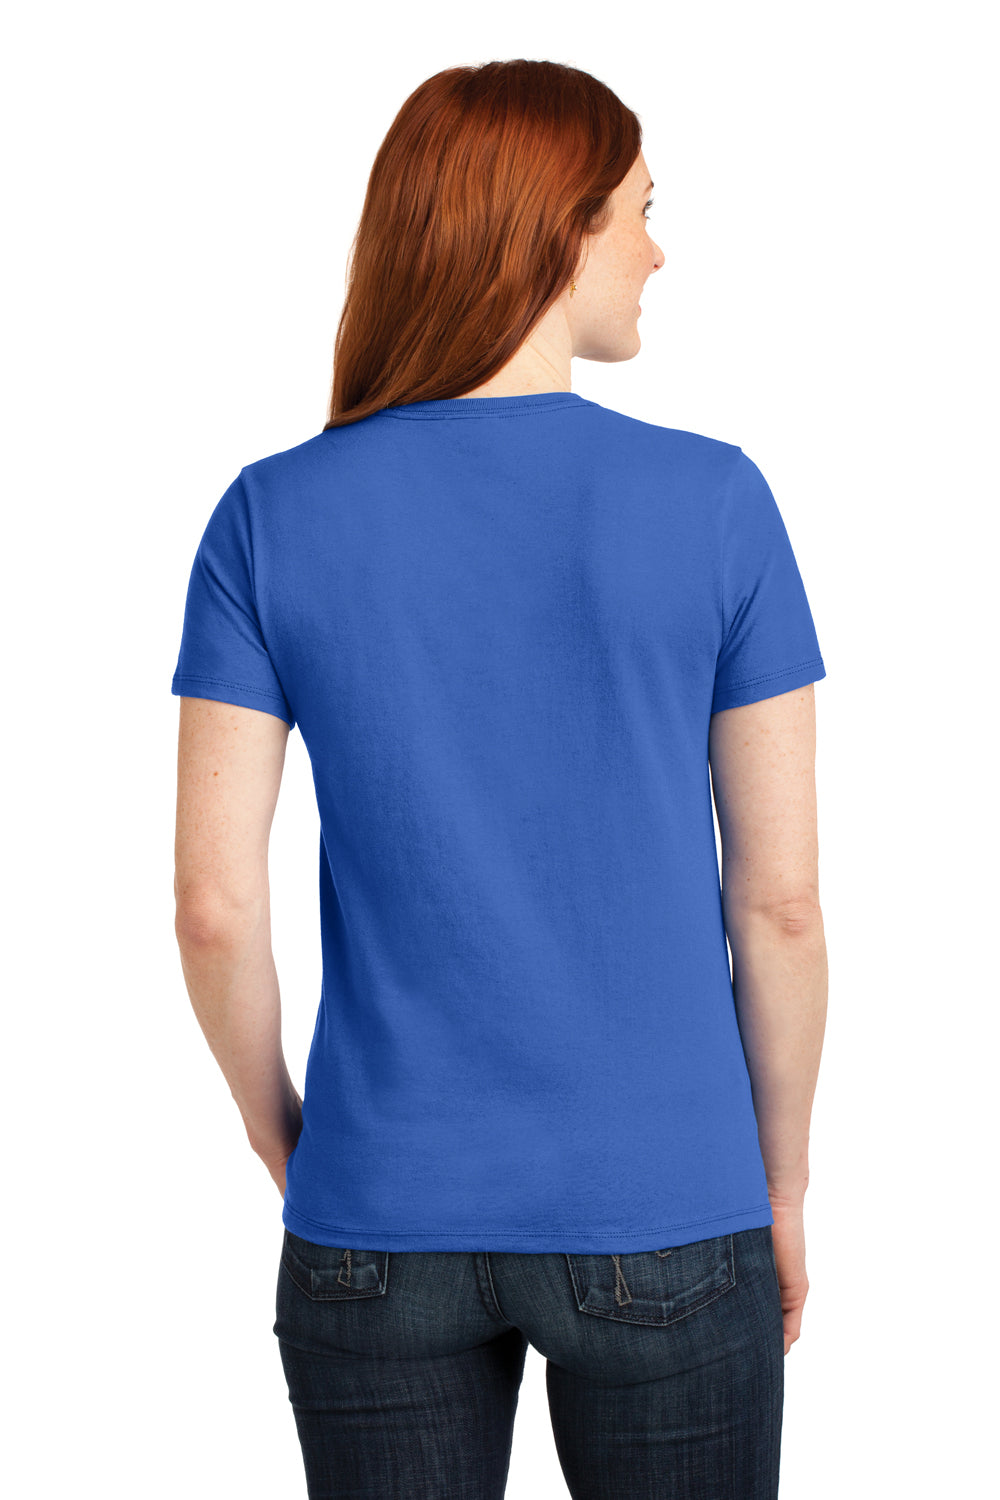 Port & Company LPC55 Womens Core Short Sleeve Crewneck T-Shirt Royal Blue Back